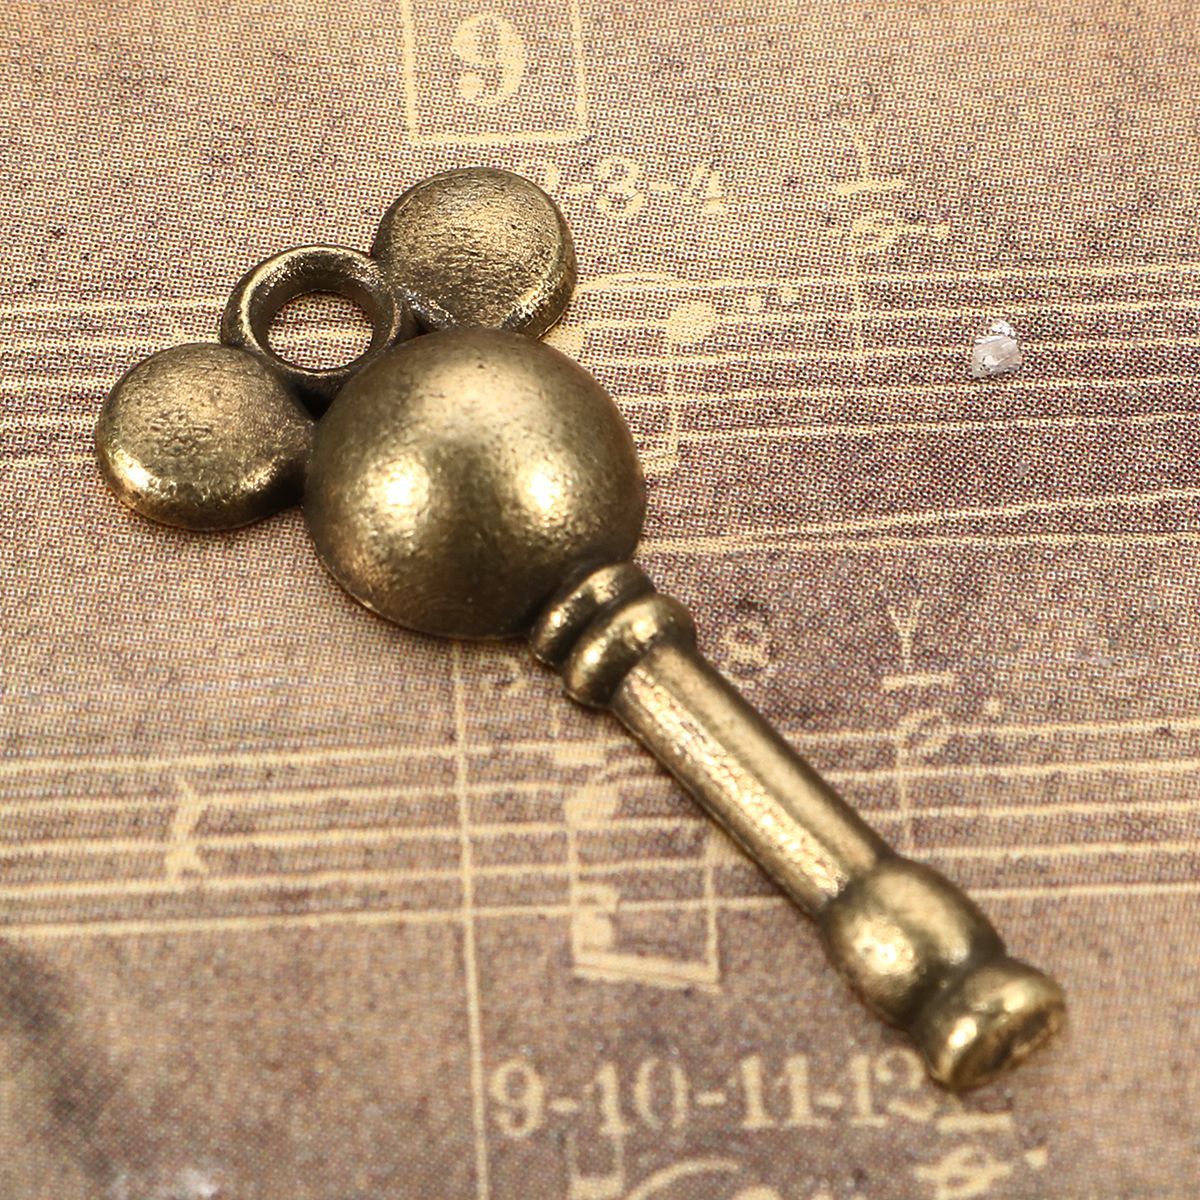 11pcs-Mixed-Antique-Vtg-old-look-Ornate-Bronze-Skeleton-Keys-Lot-Pendant-Fancy-Heart-Decorations-1286744